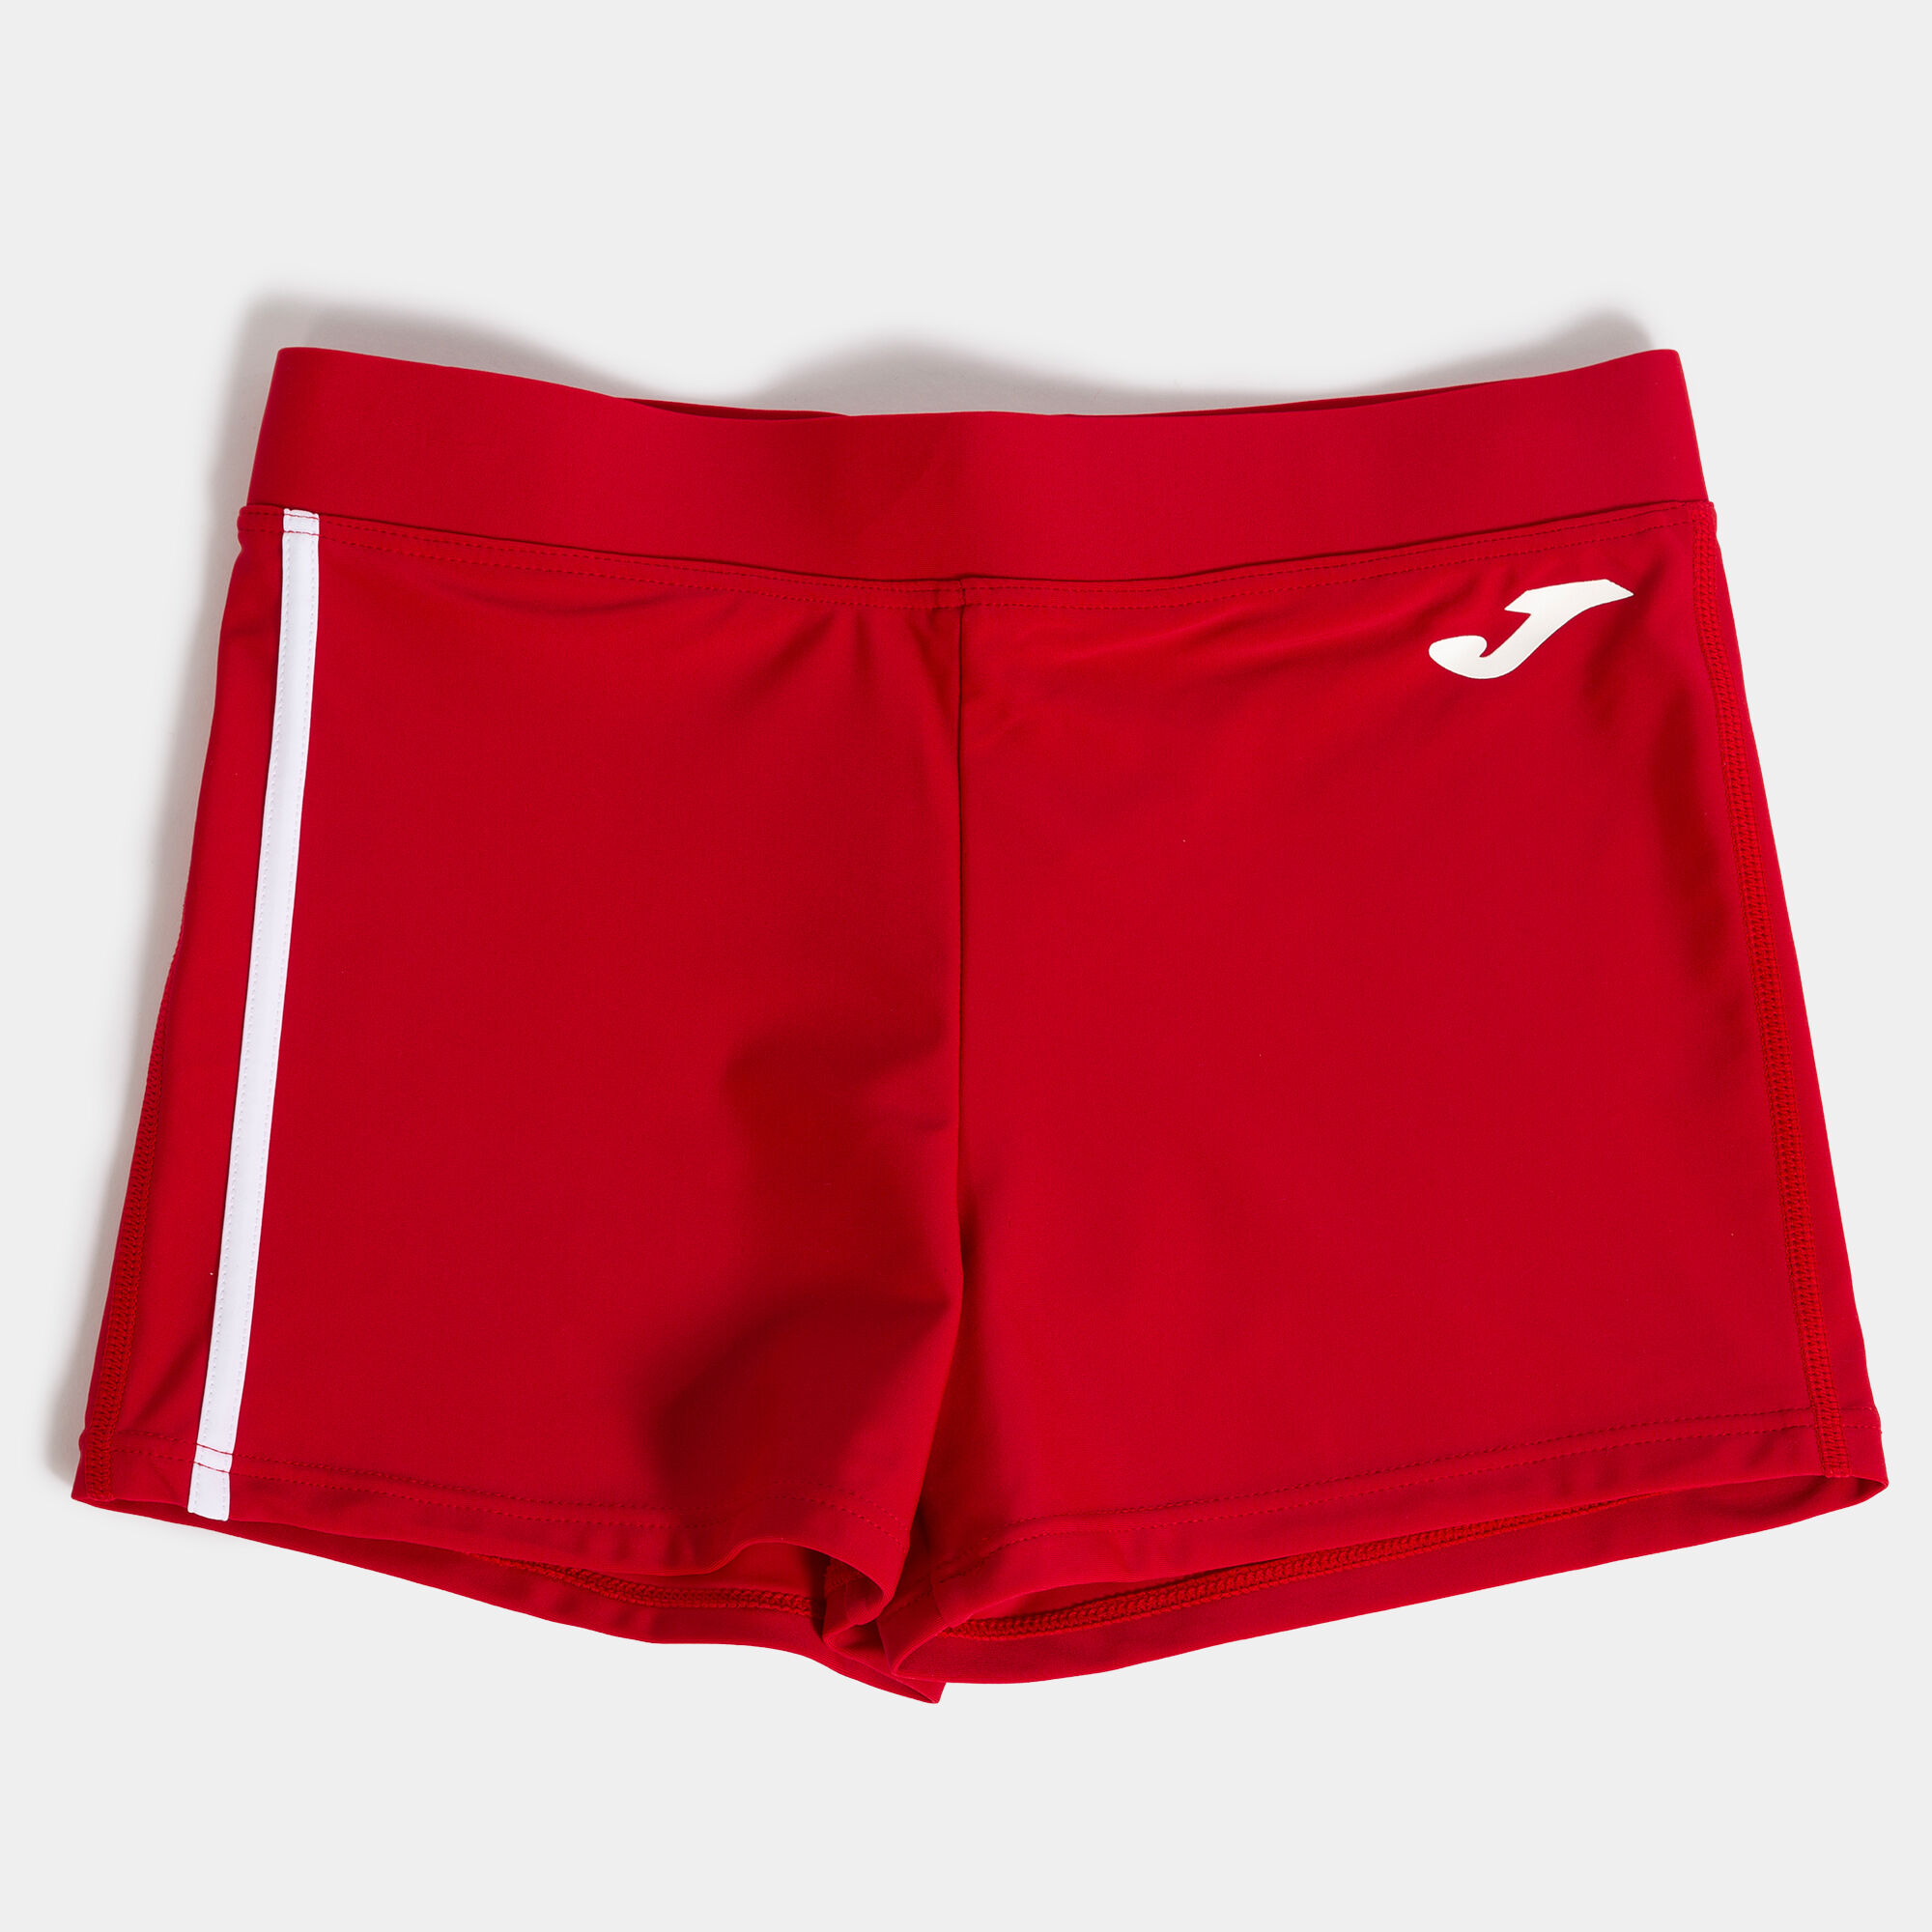 Swimming shorts man Shark red white